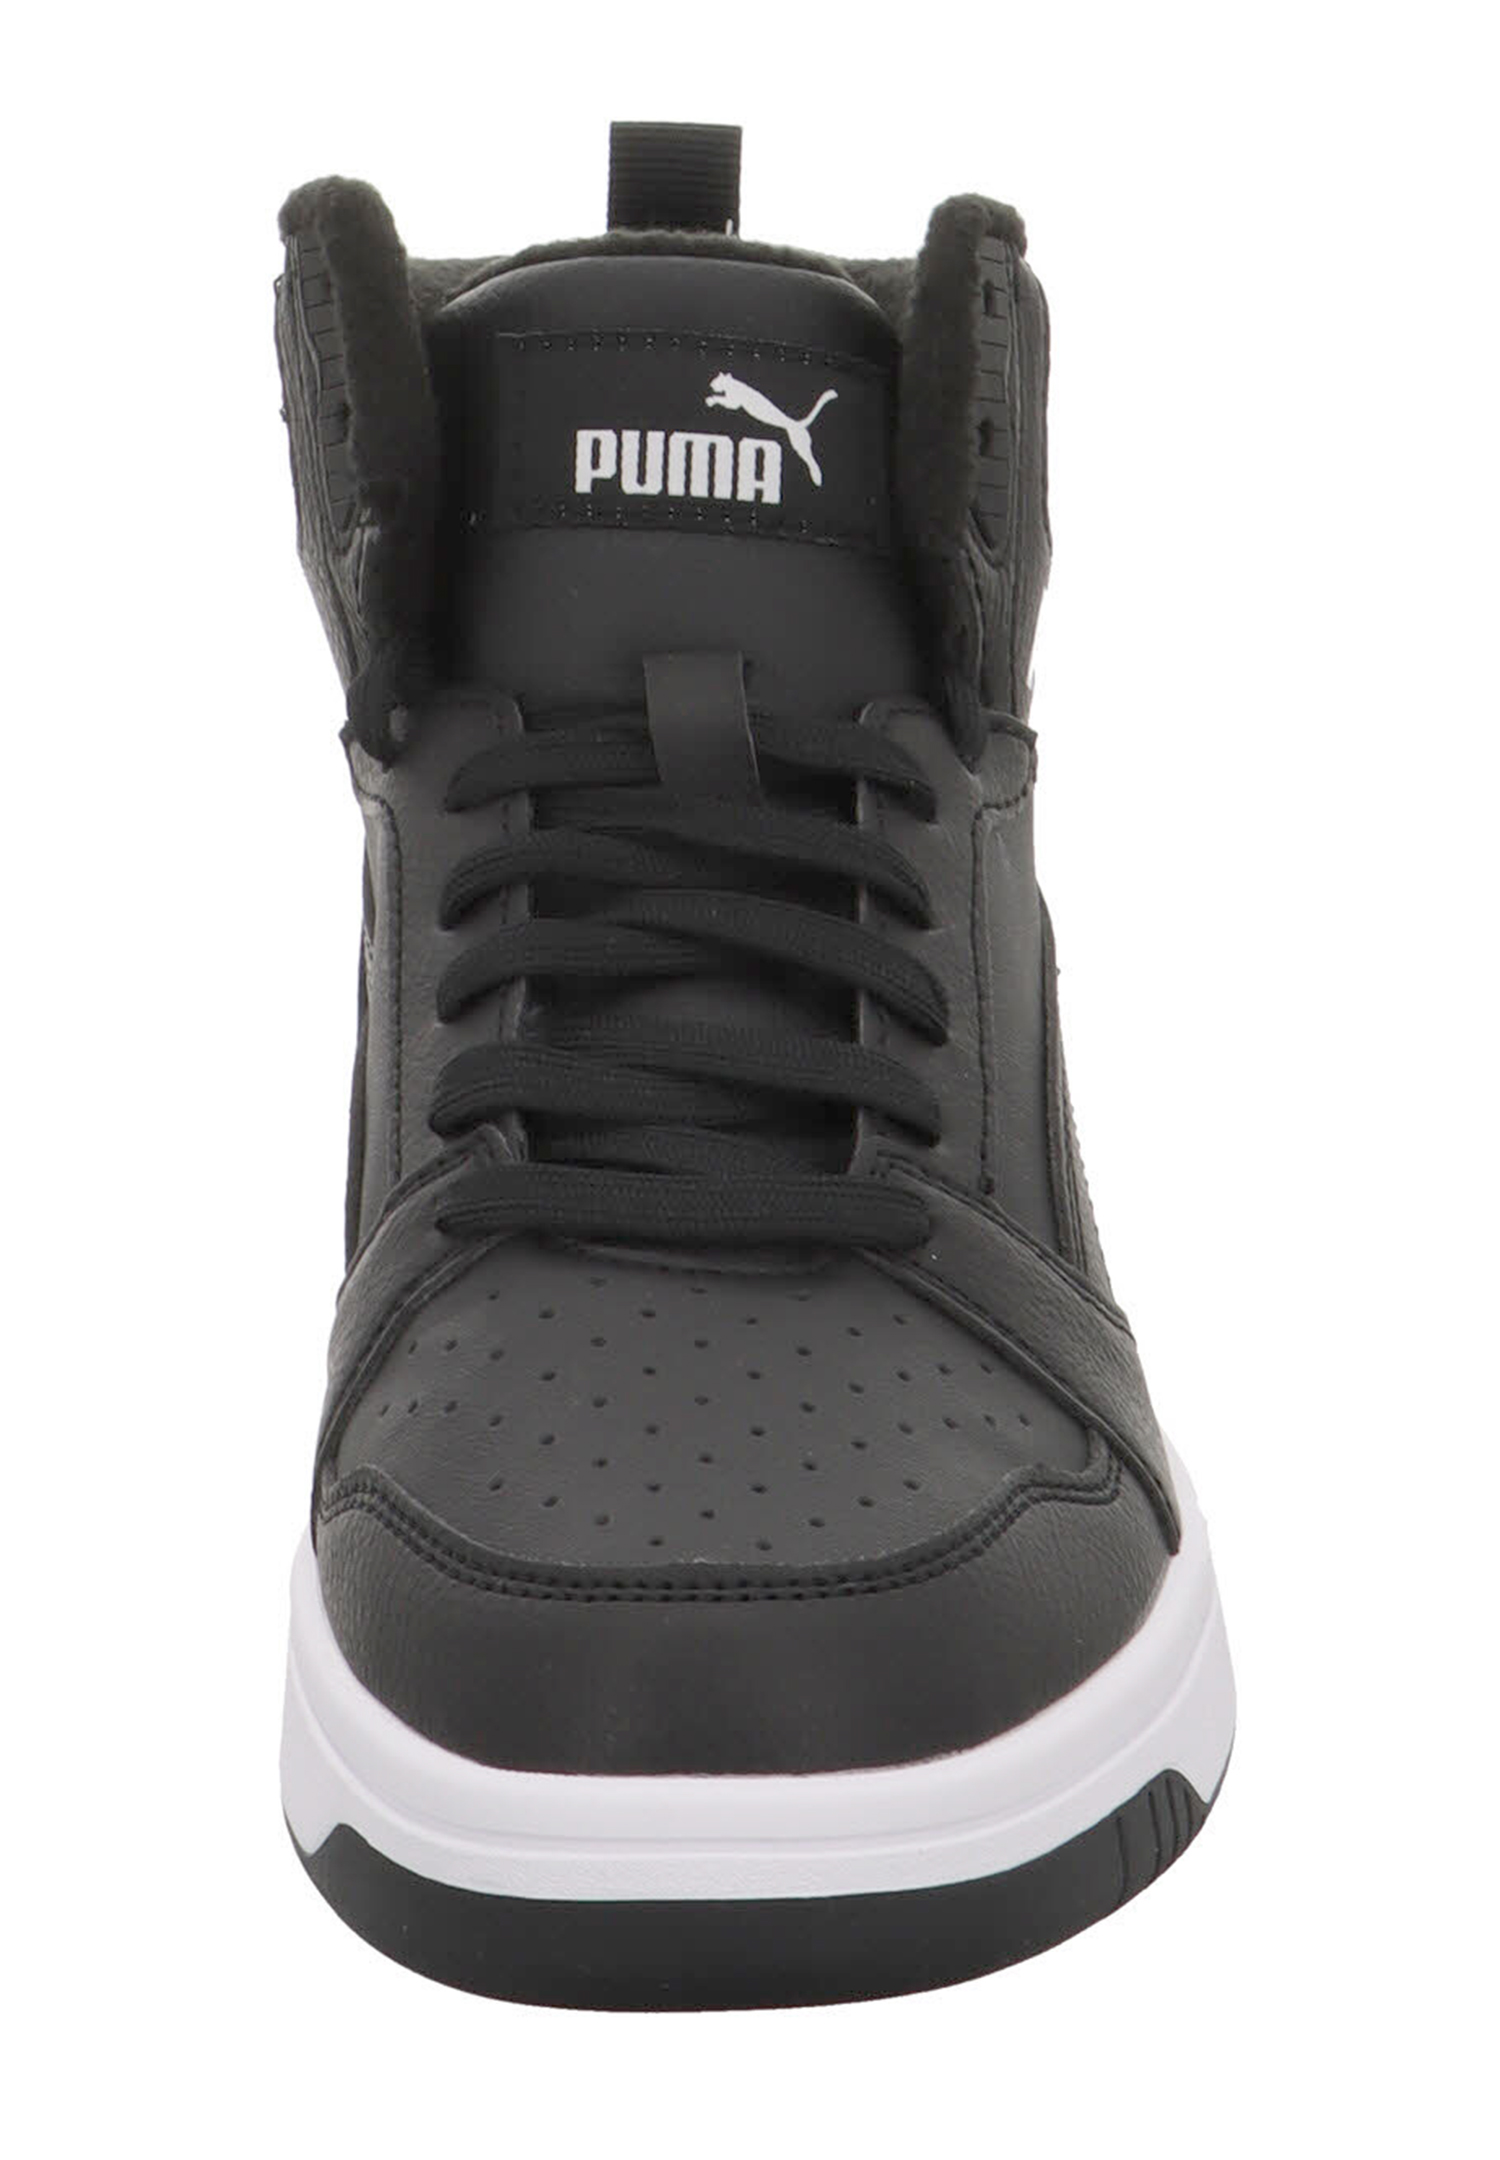 Puma Rebound V6 MID WTR JR Unisex Kinder Sneaker gefüttert 394685 01